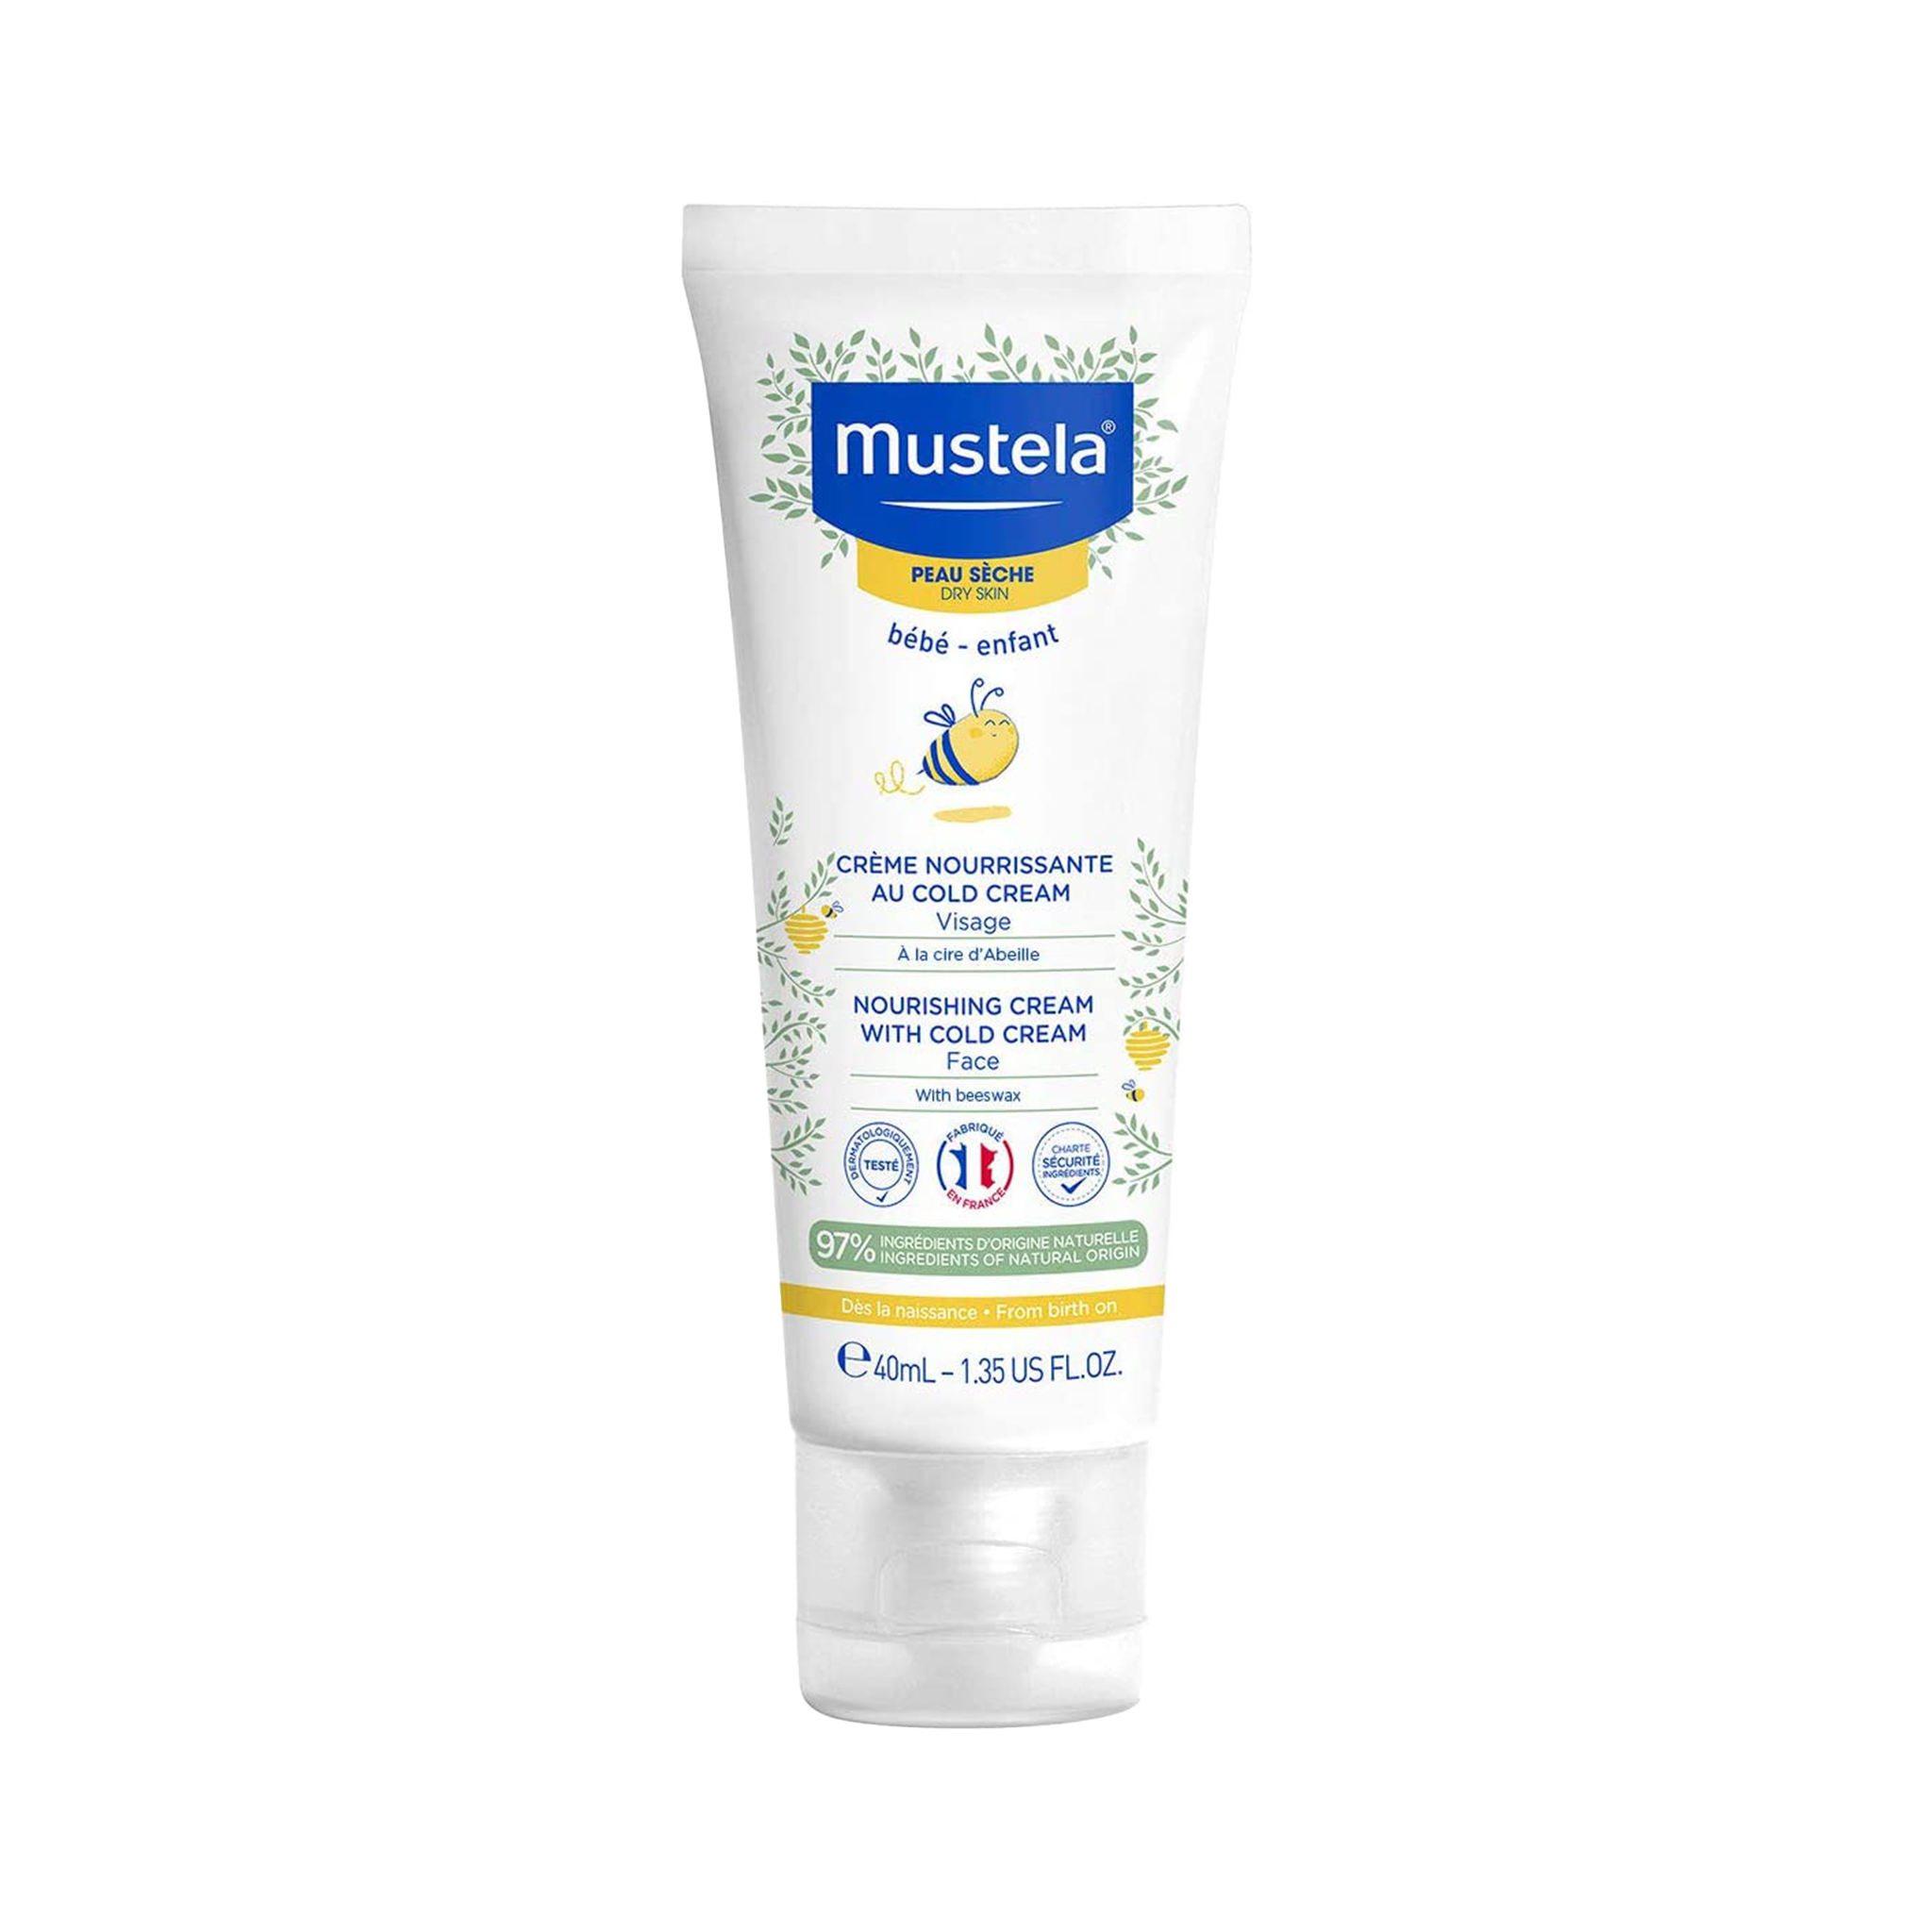 Mustela - Nourishing Cream With Cold Cream Face 40ml